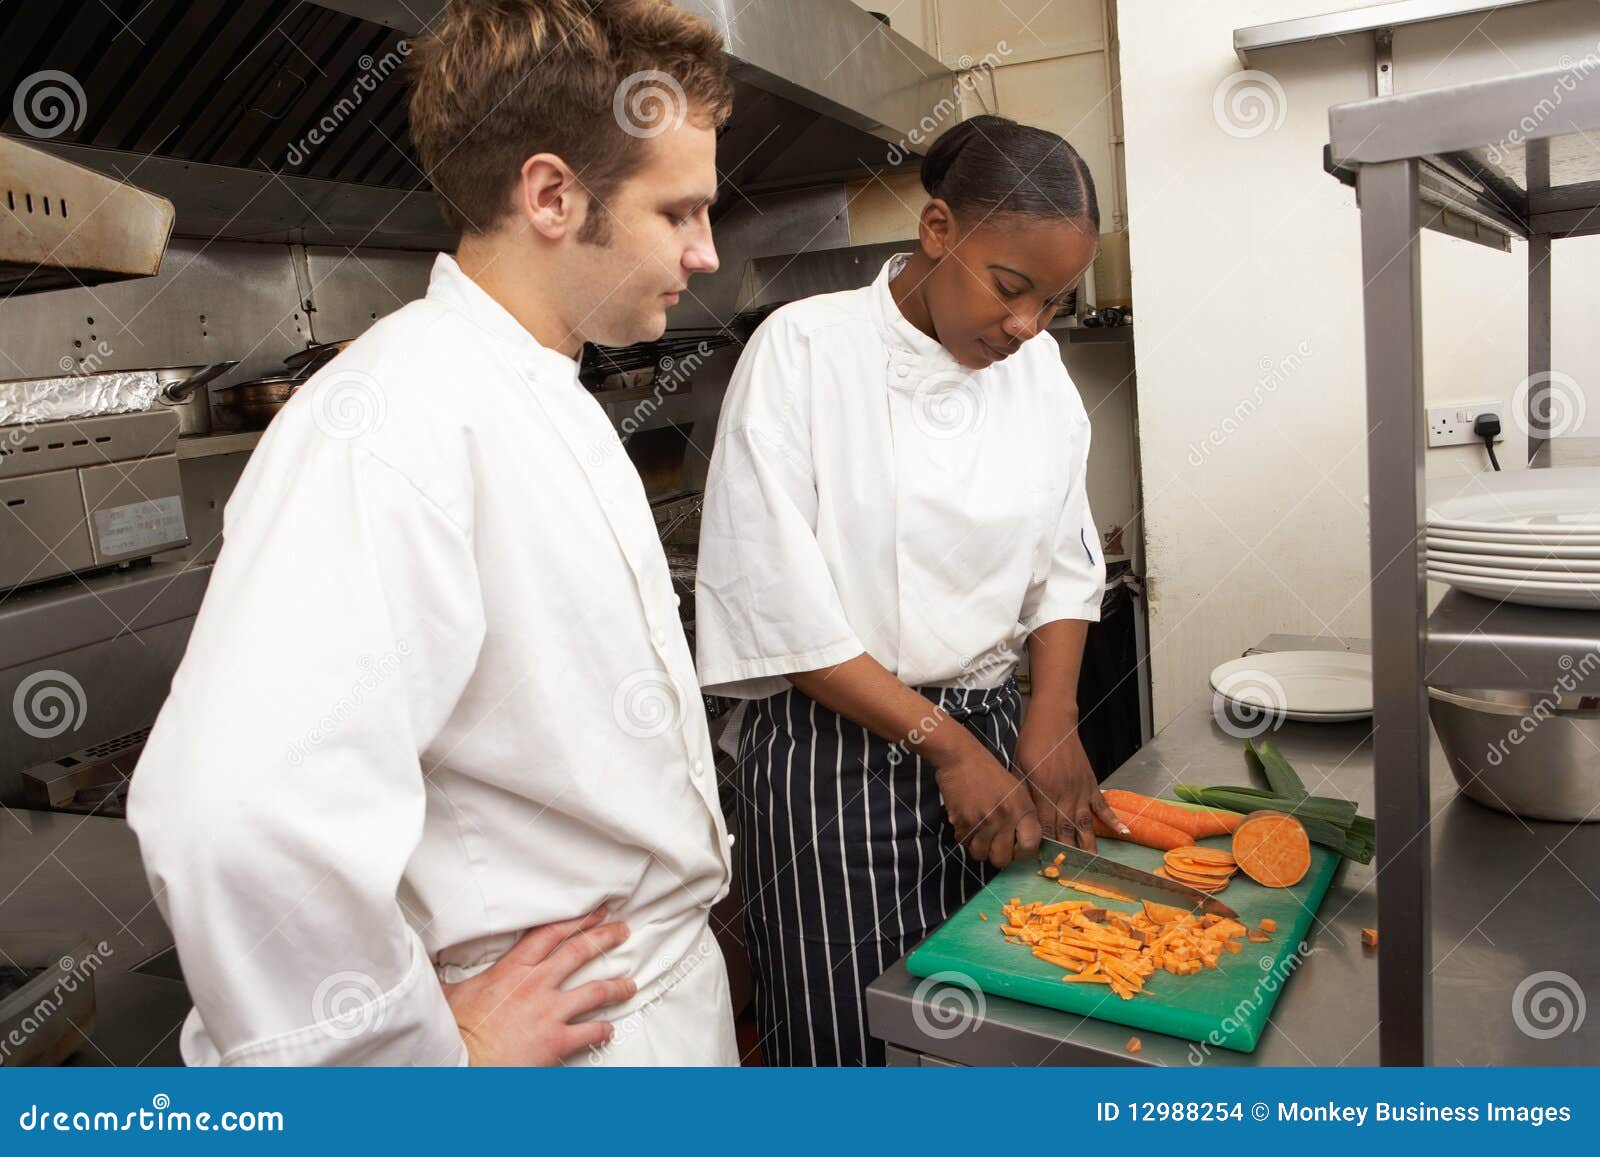 chef instructing trainee